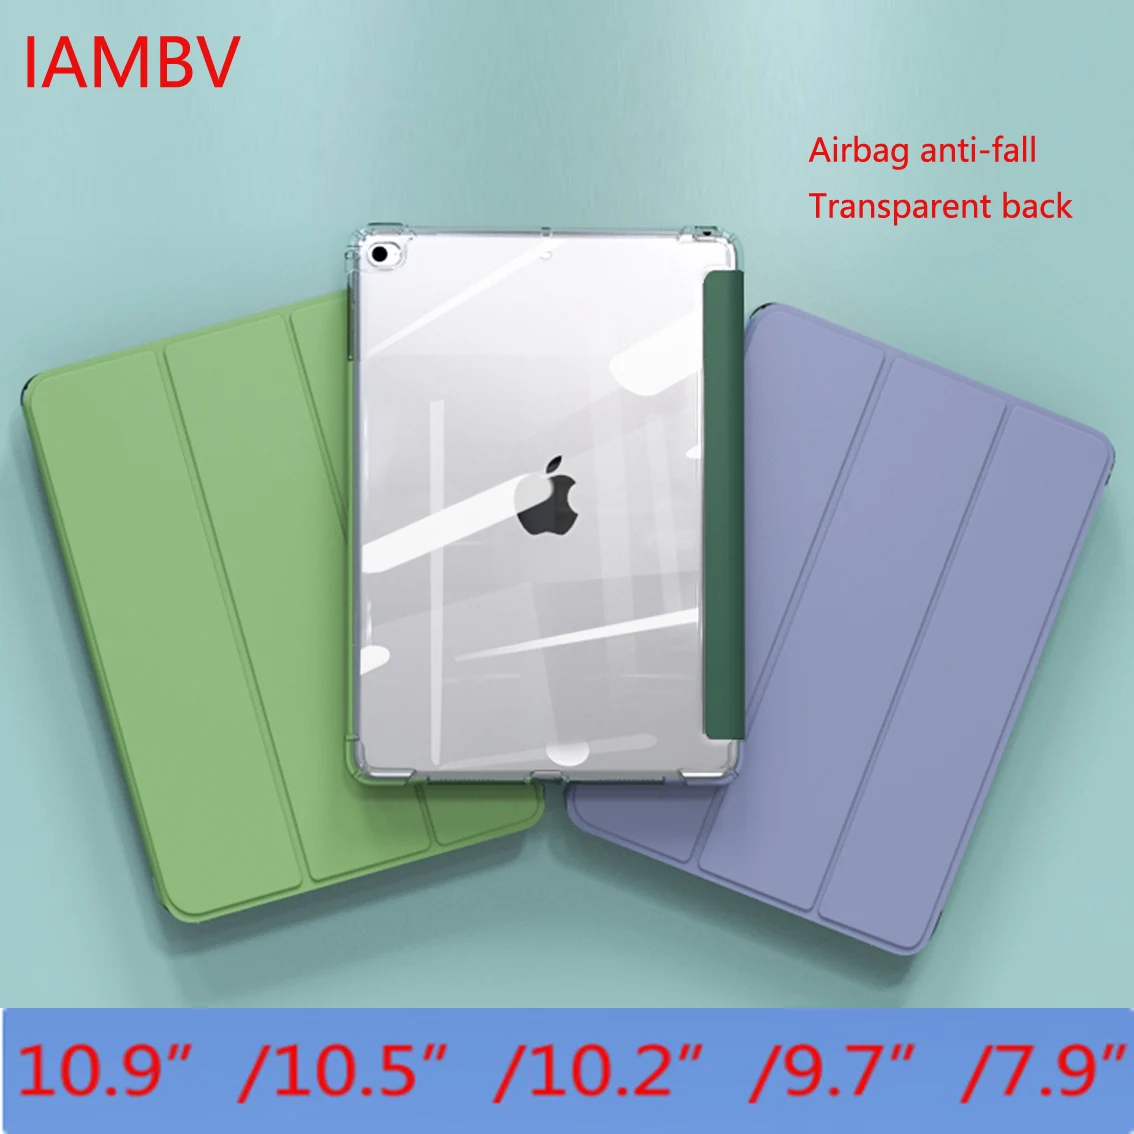 Get This Soft shell case For iPad Air 3 Air 2 Air 1 Case Pro 11 9.7 10.2 10.5 inch ,Case for iPad QLXK6mRz7